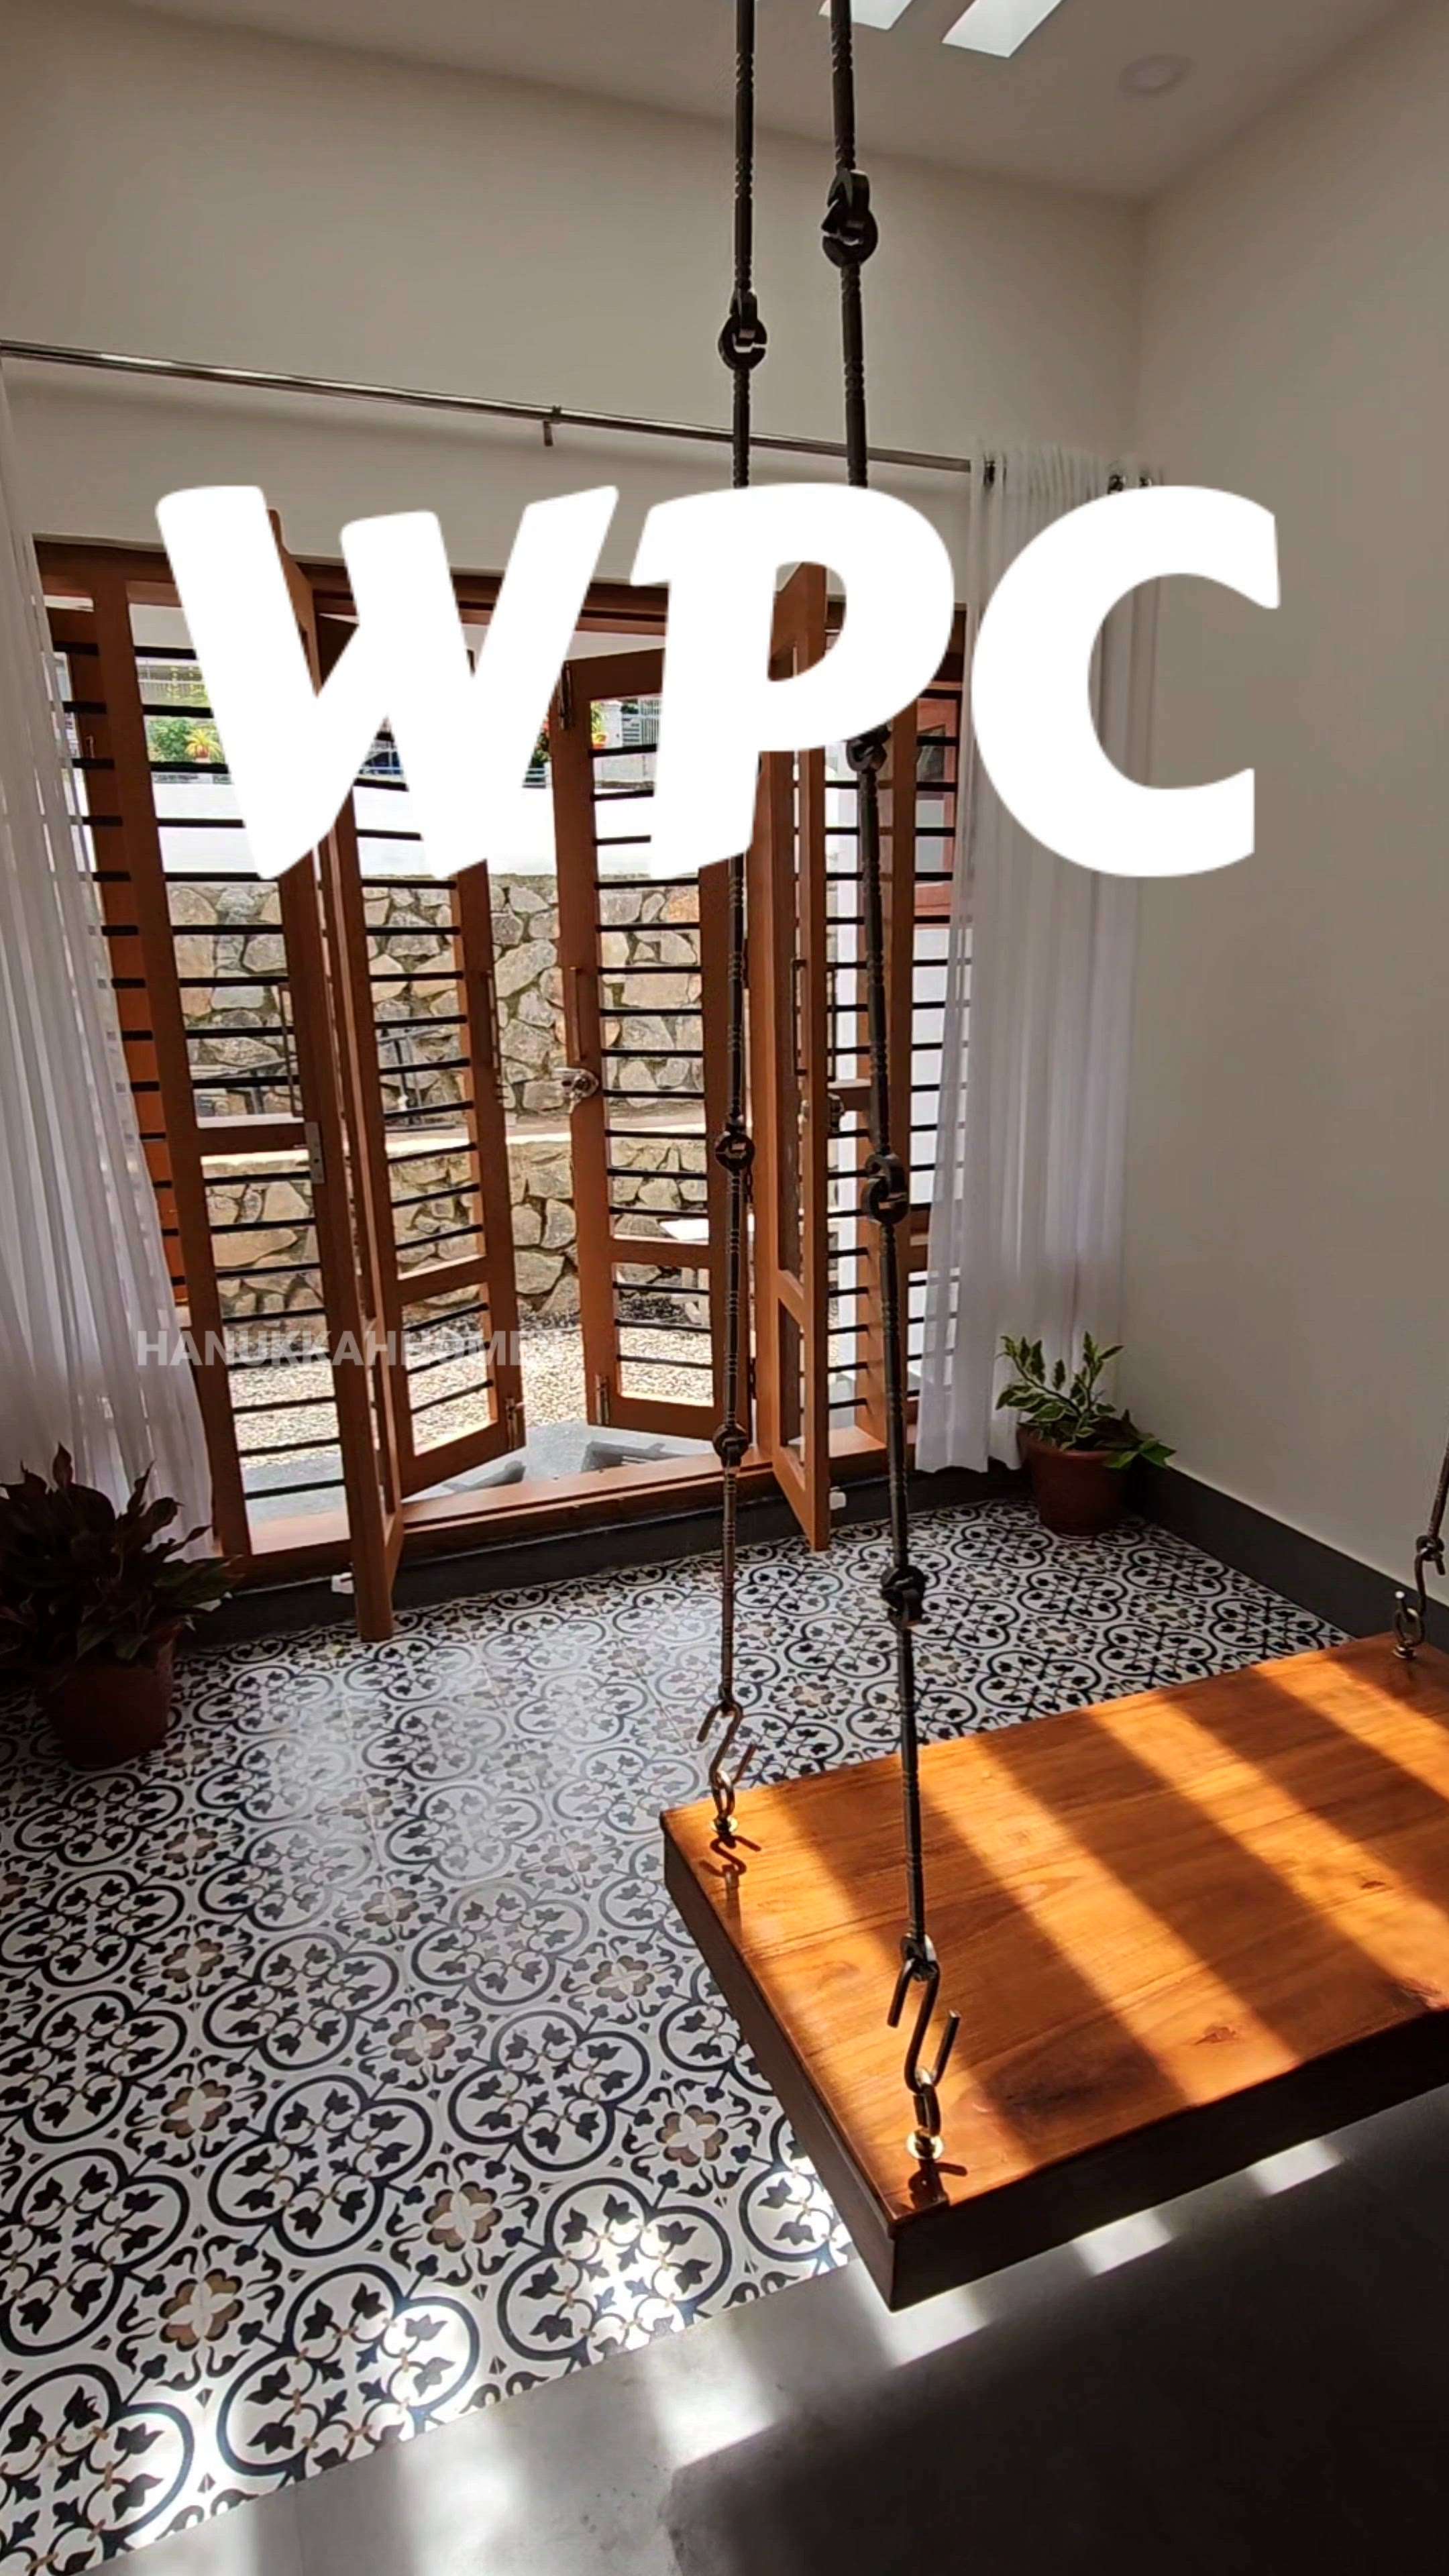 WPC doors windows ഗുണങ്ങൾ എന്തെല്ലാം?
#creatorsofkolo #thiruvalla #interiortrends #wpcboards #wpcwork